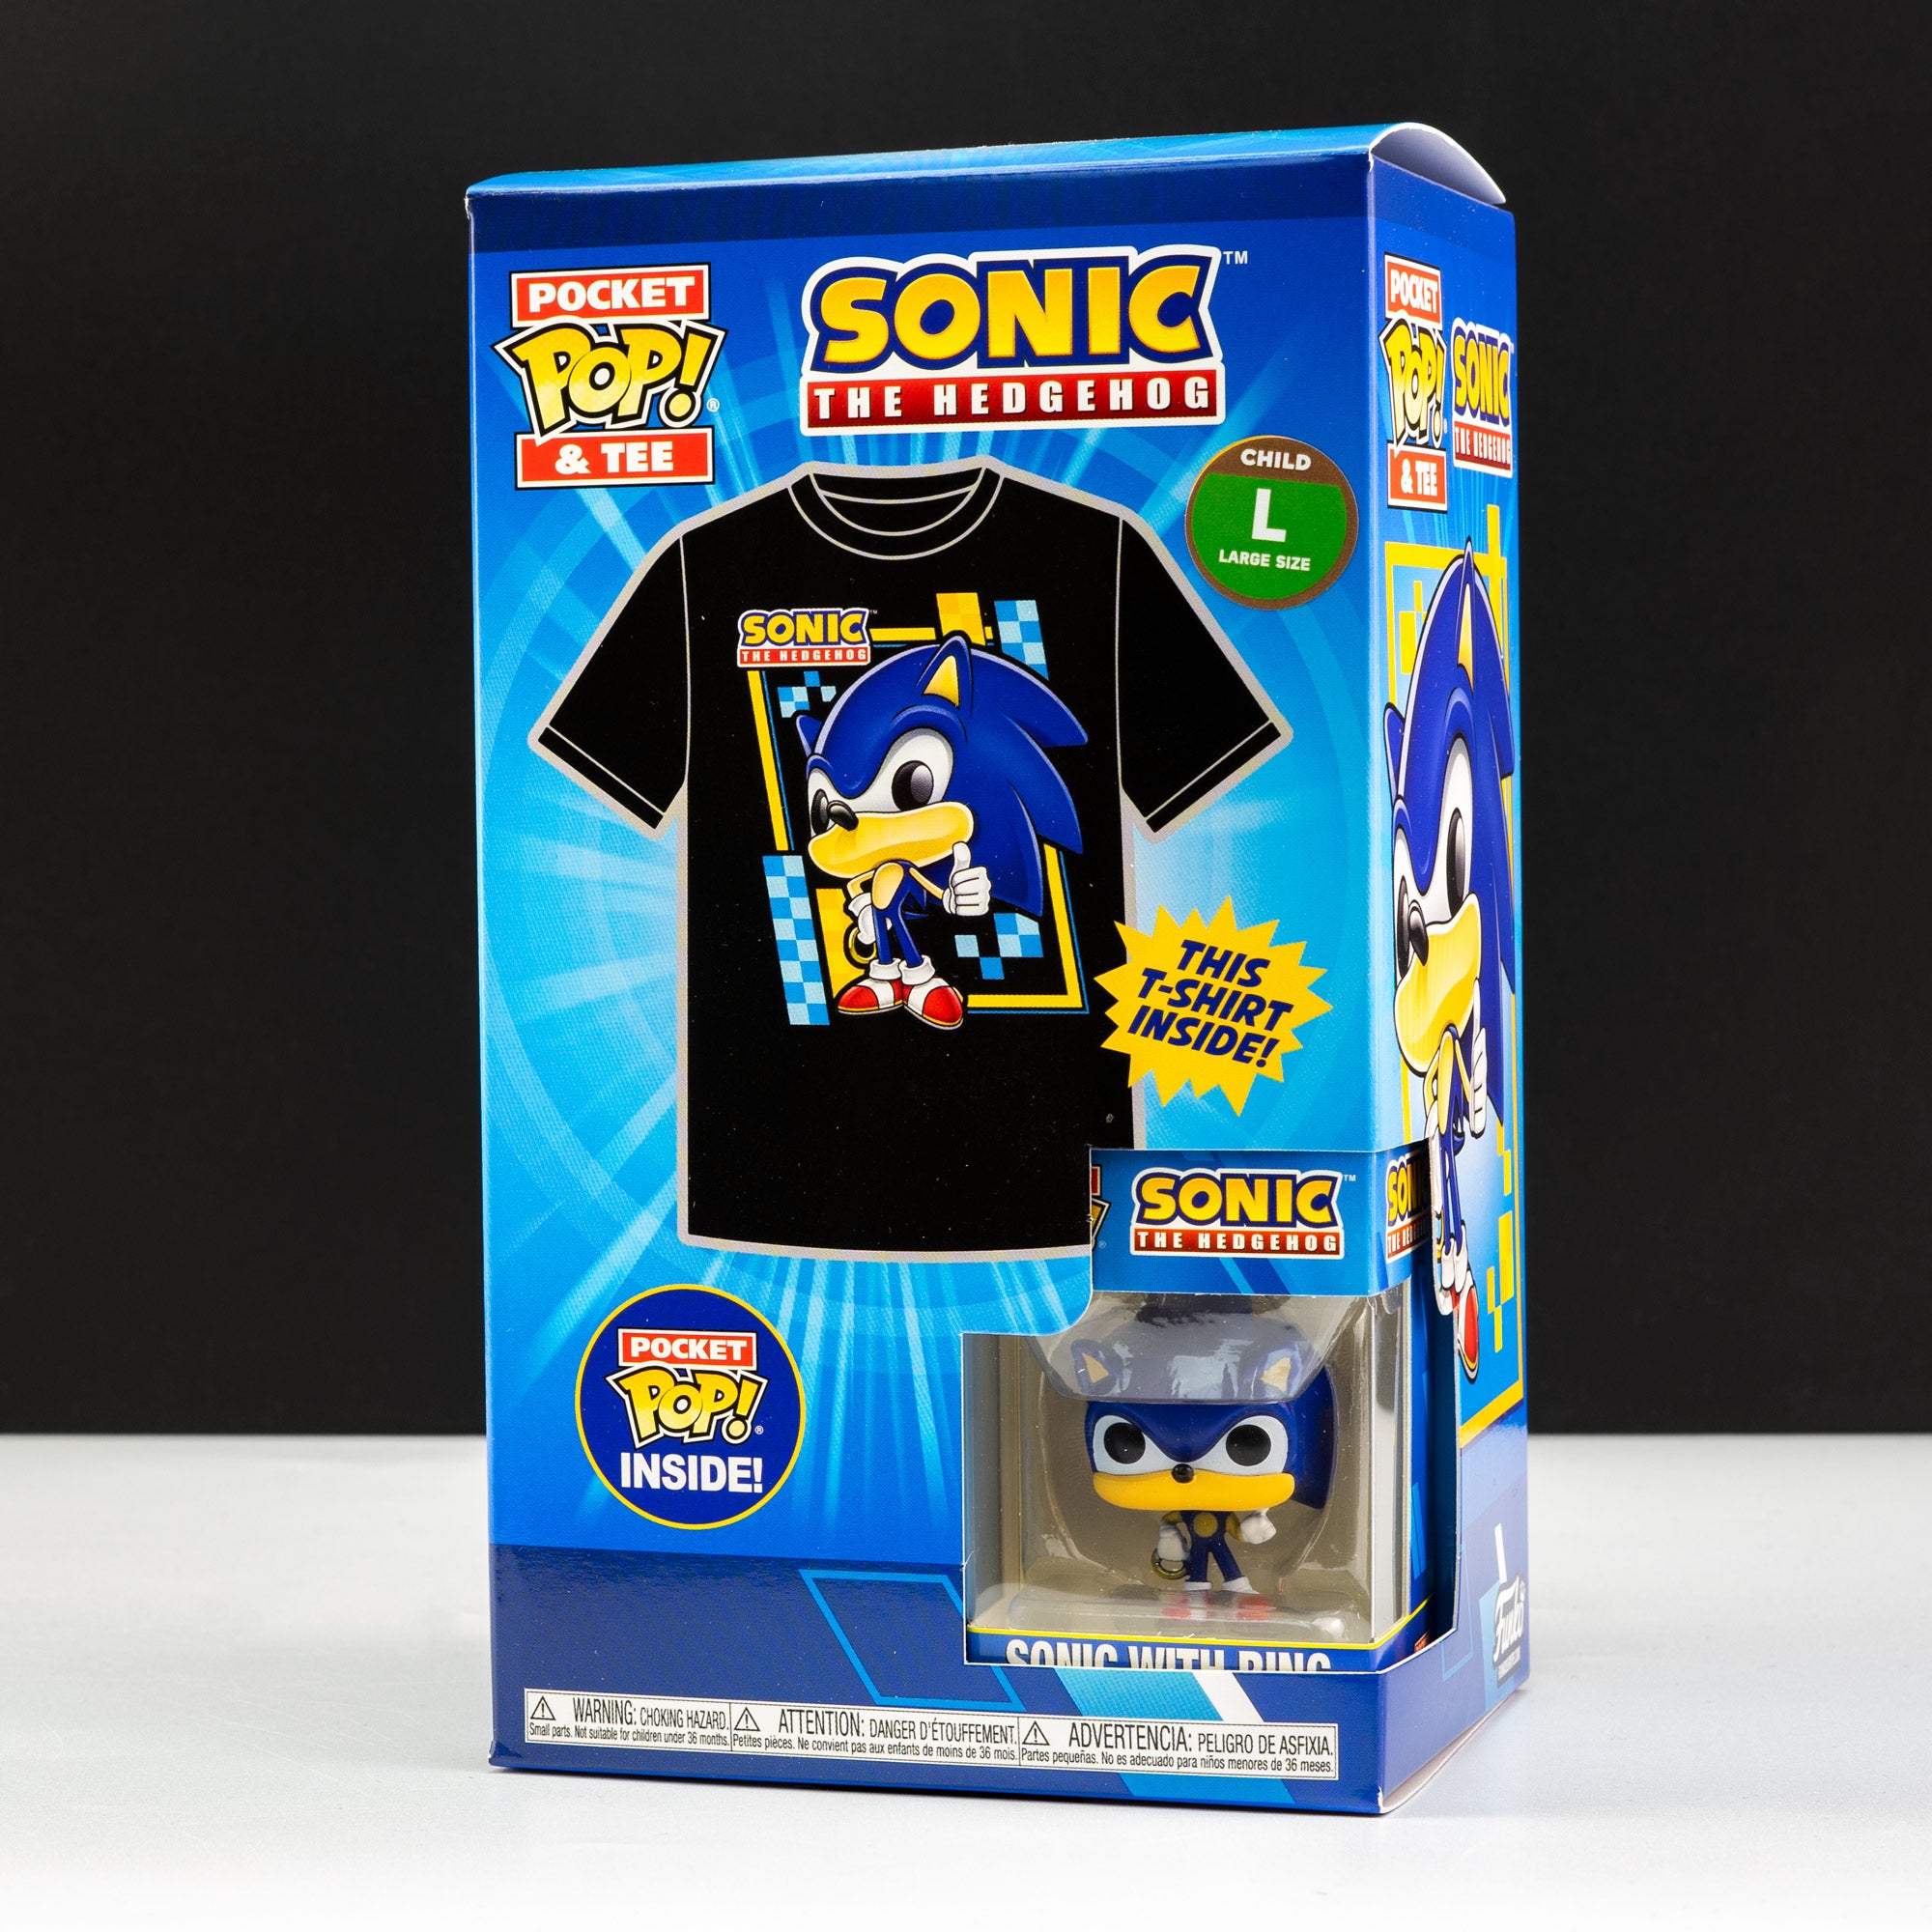 Sega Sonic the Hedgehog with Ring Pocket Pop! Vinyl and Tee Set for Kids